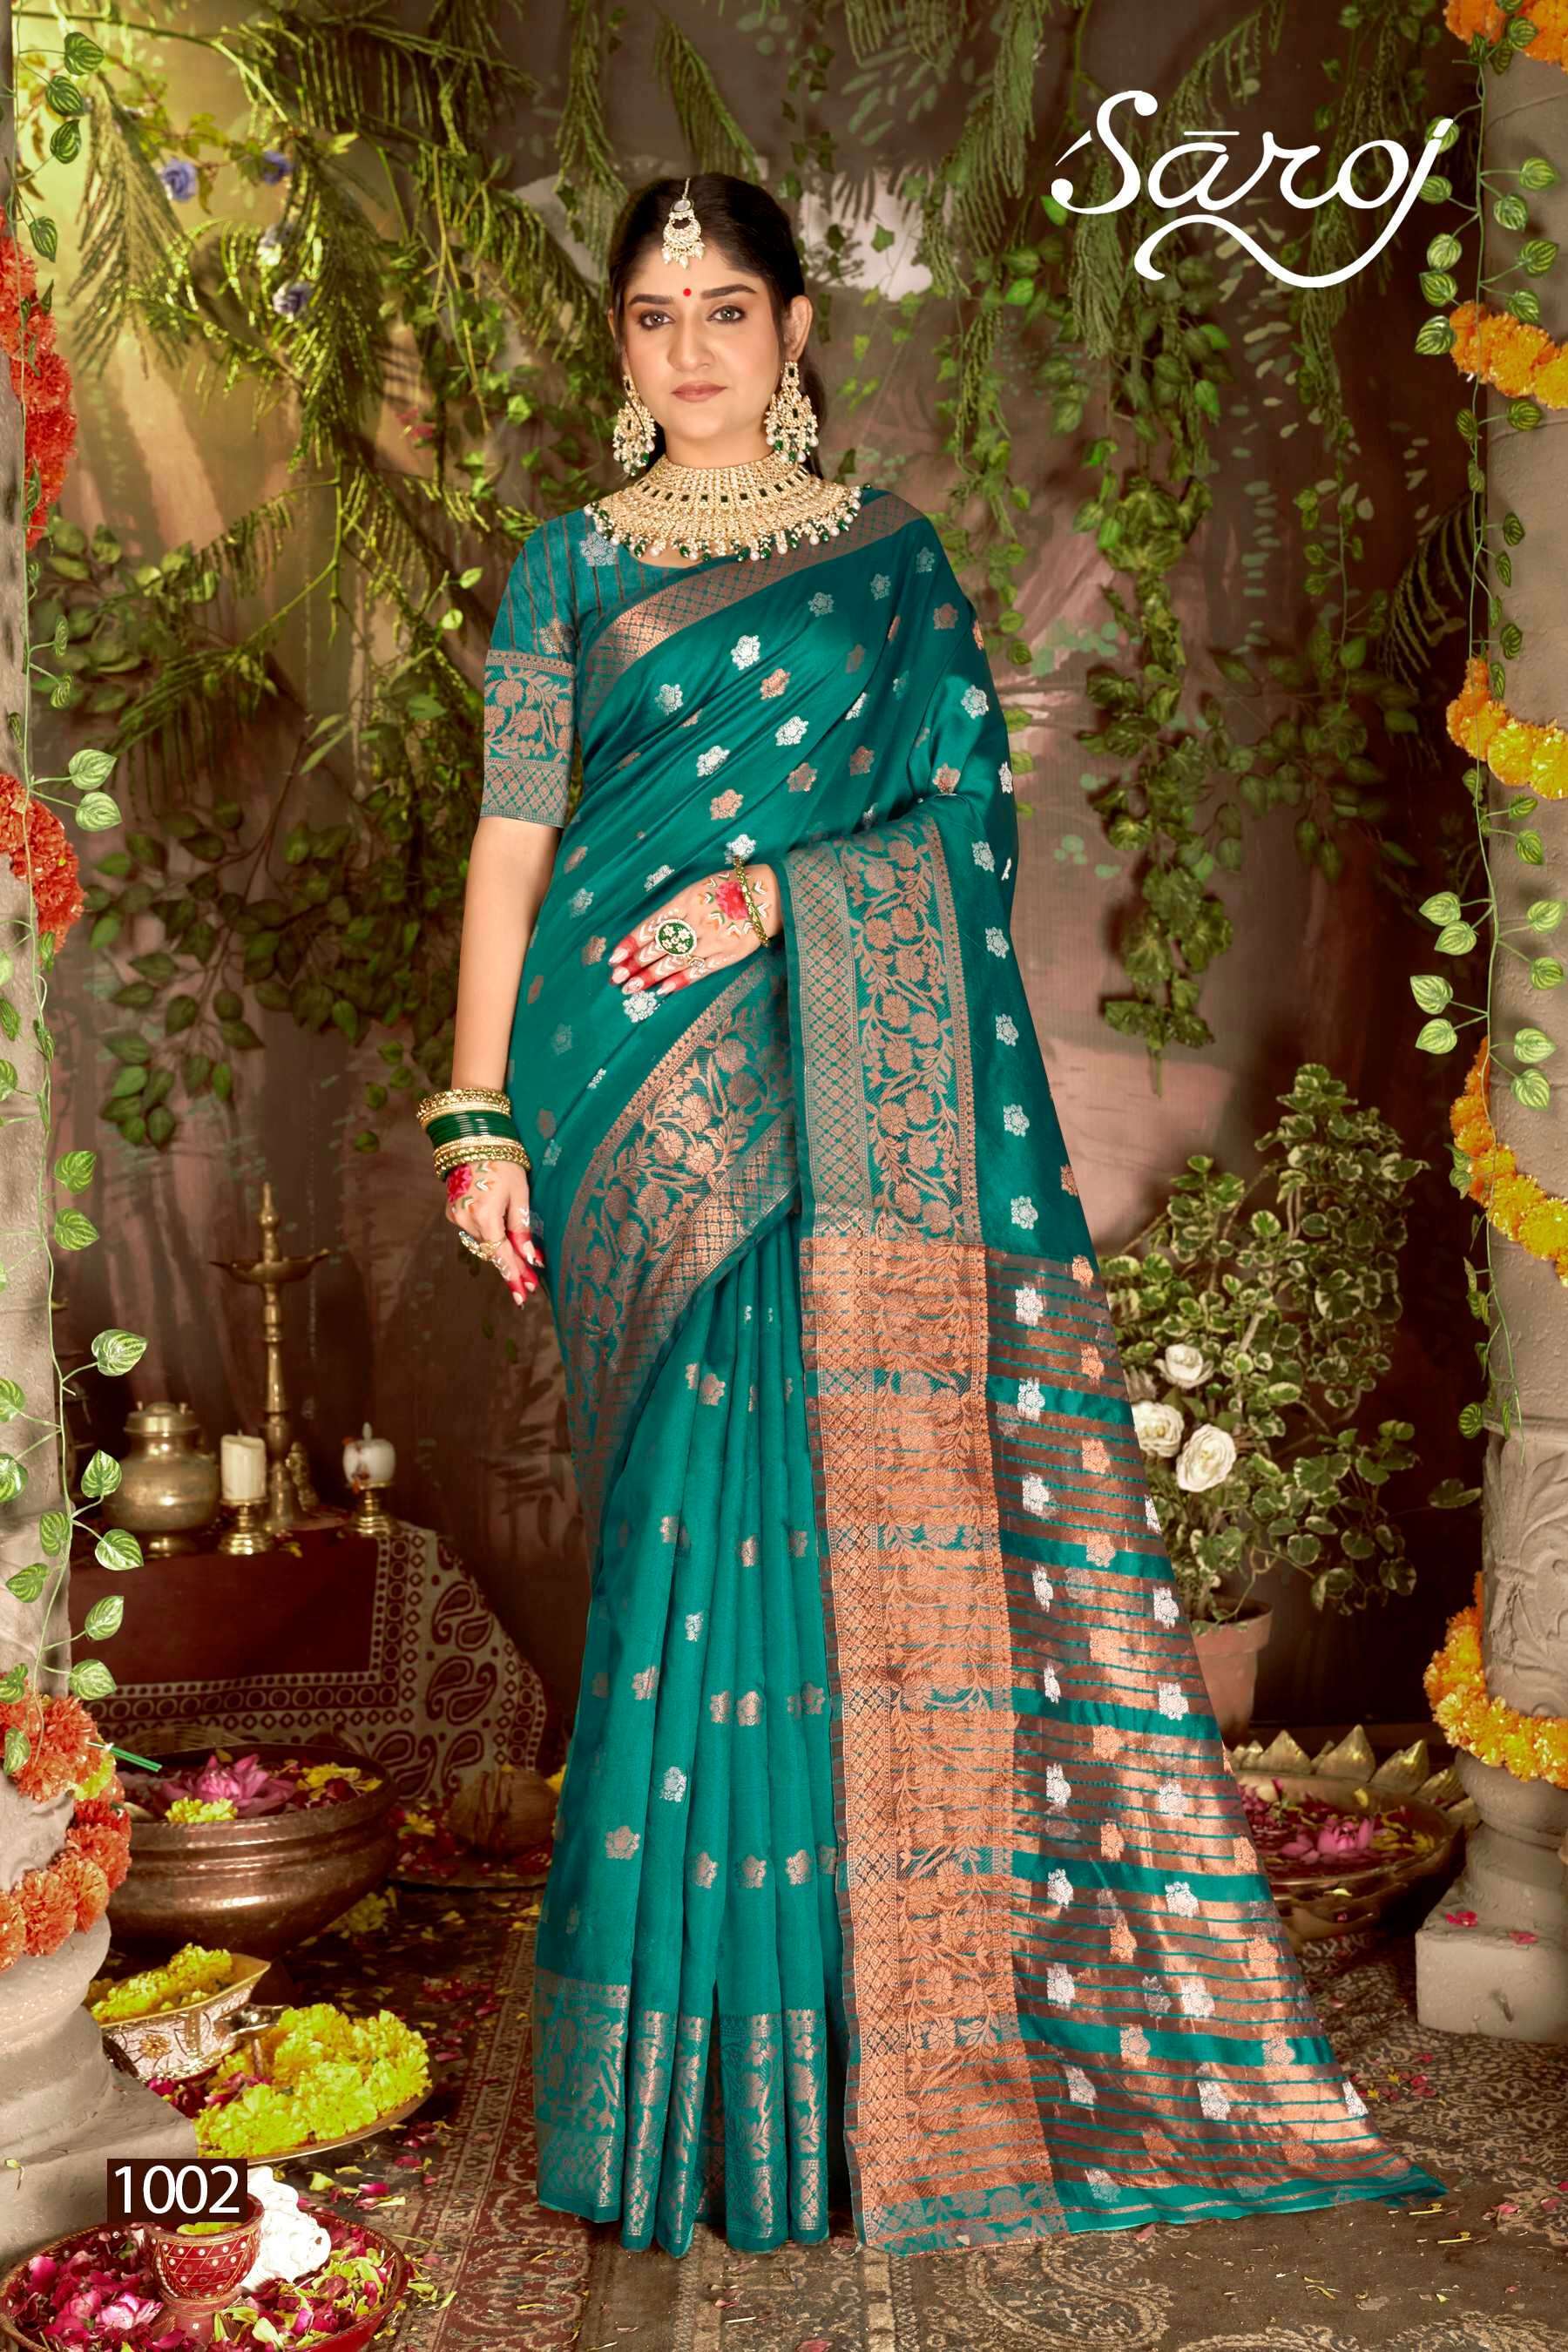 Saroj Sarswati Vol.4 Soft silk Saree shopping in India